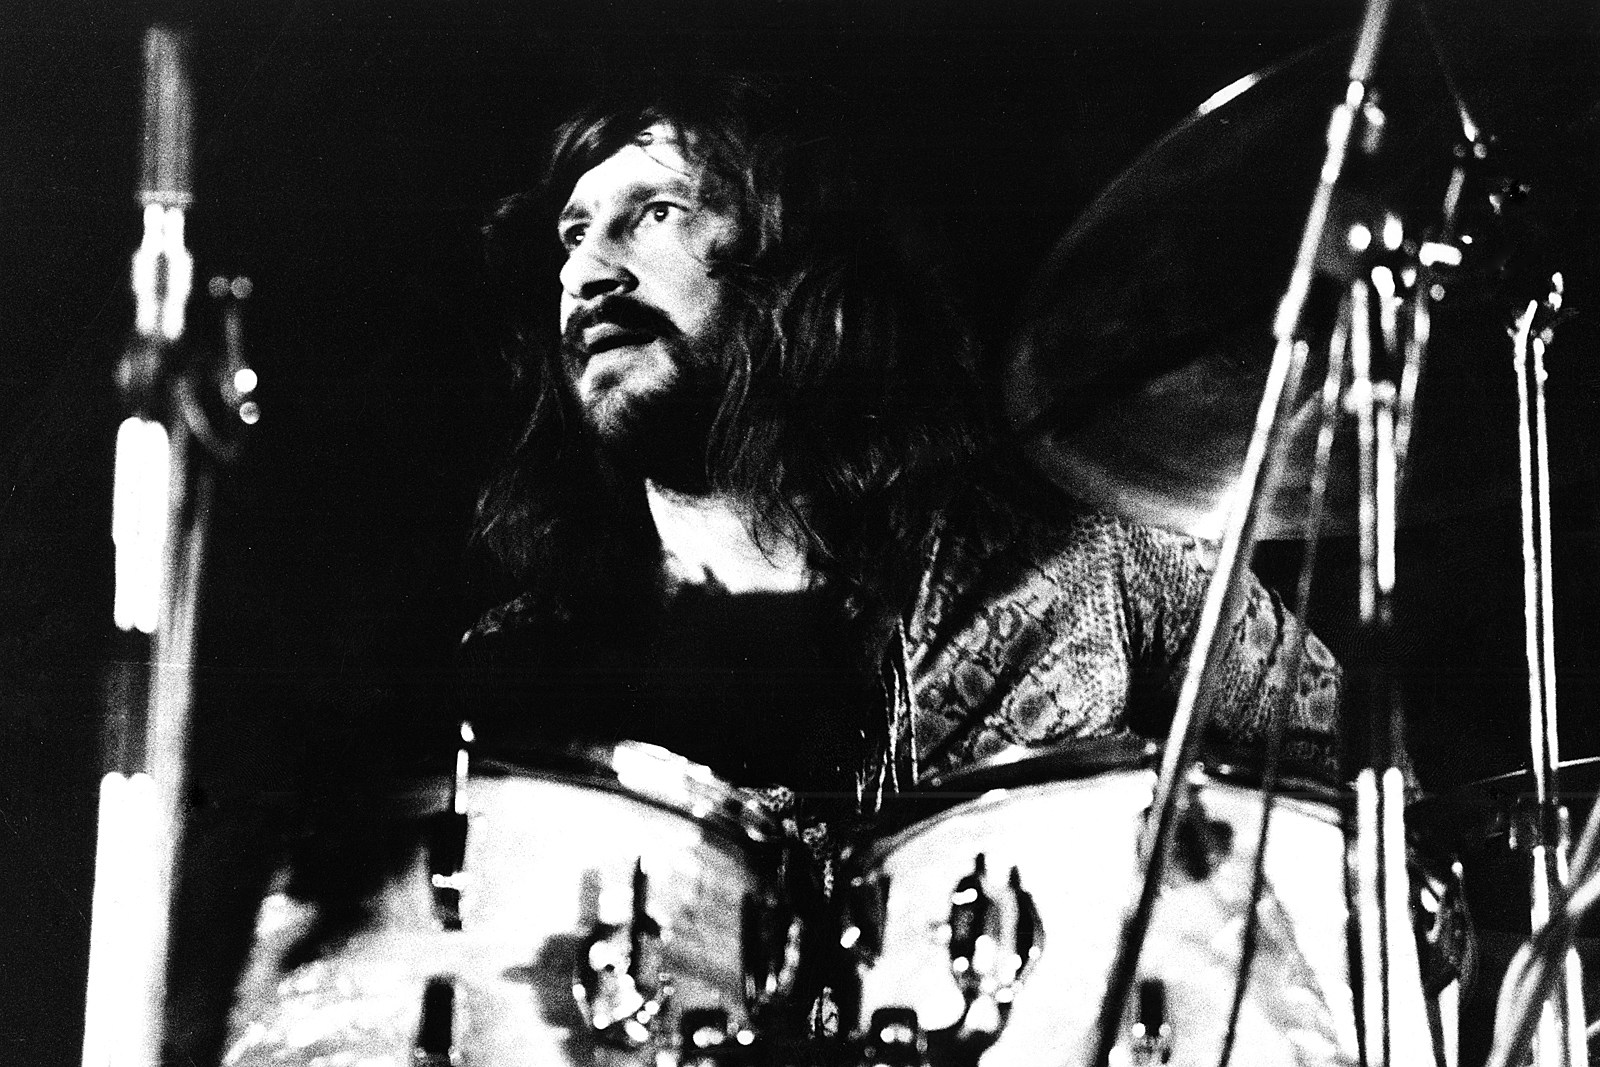 The Moody Blues Drummer Graeme Edge Dies at 80